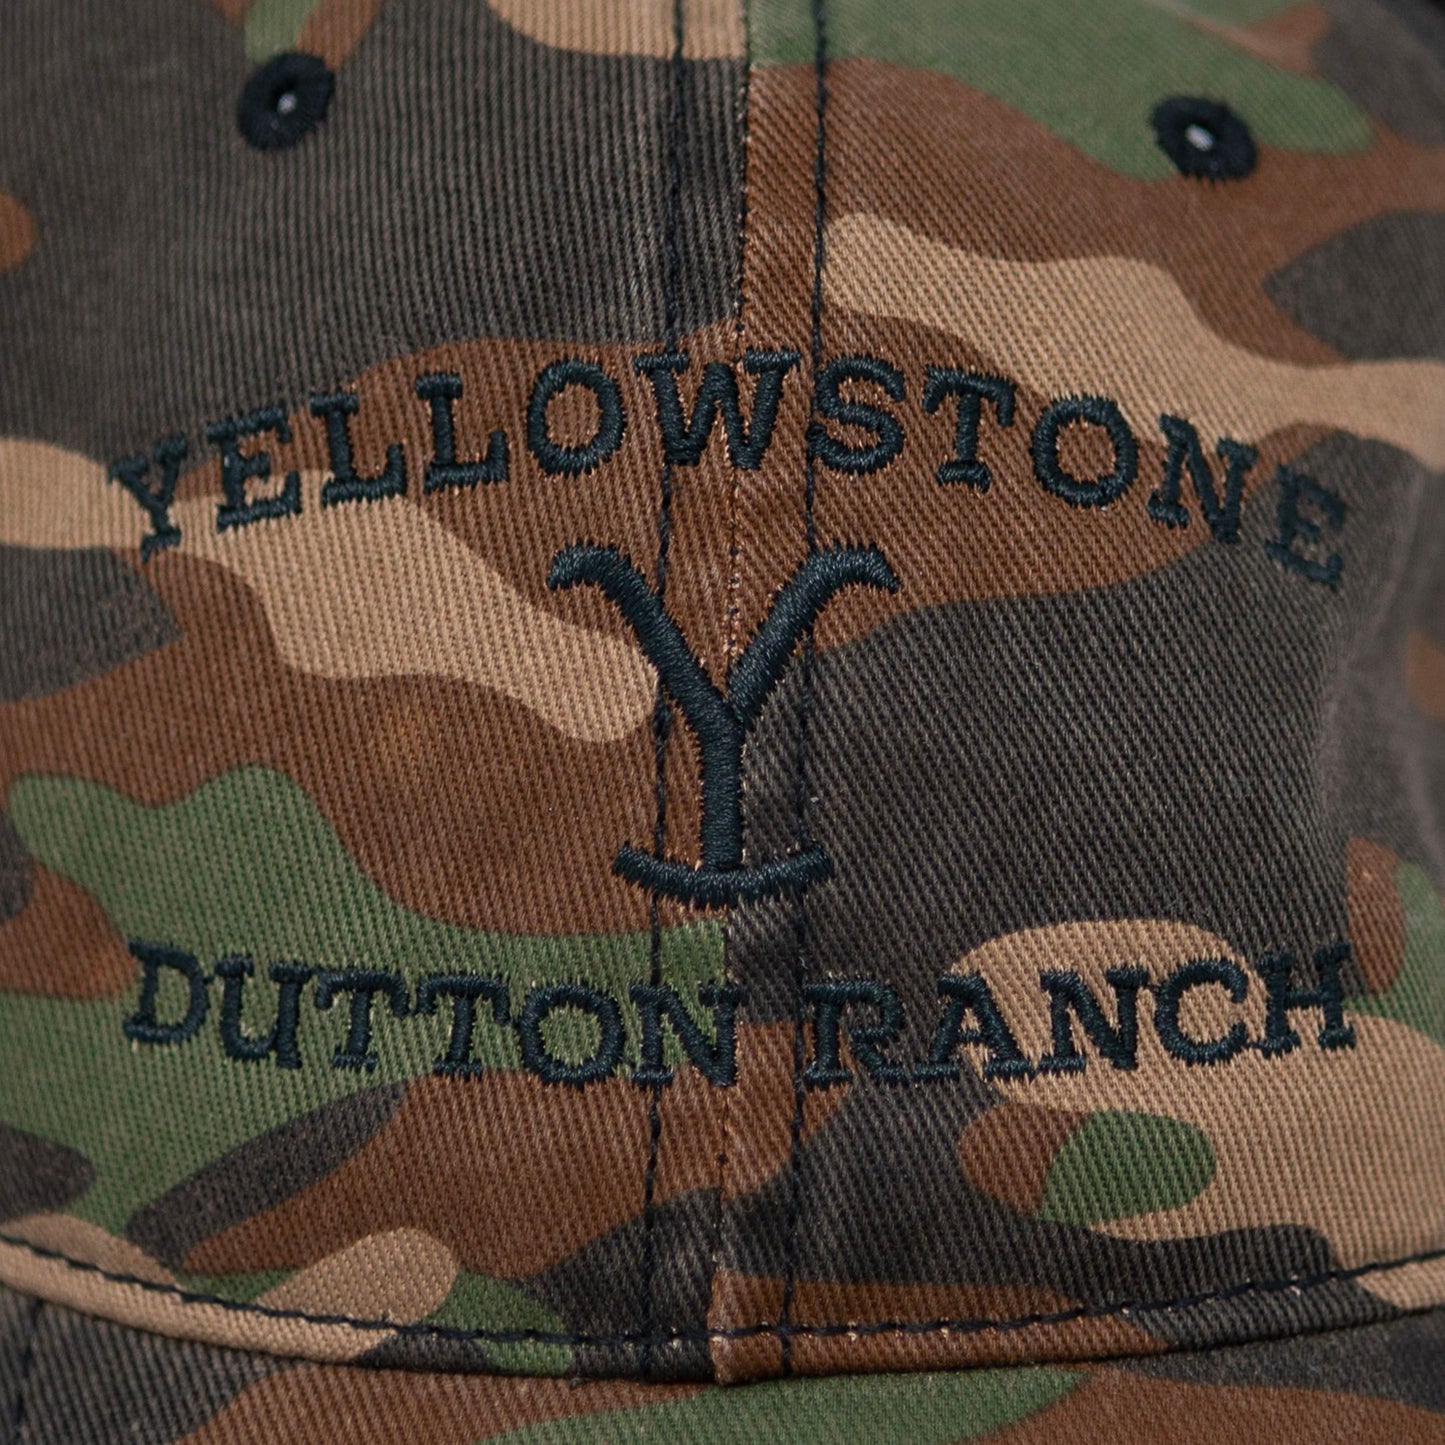 Yellowstone Dutton-Ranch Logo "As seen on" Tarnkappe